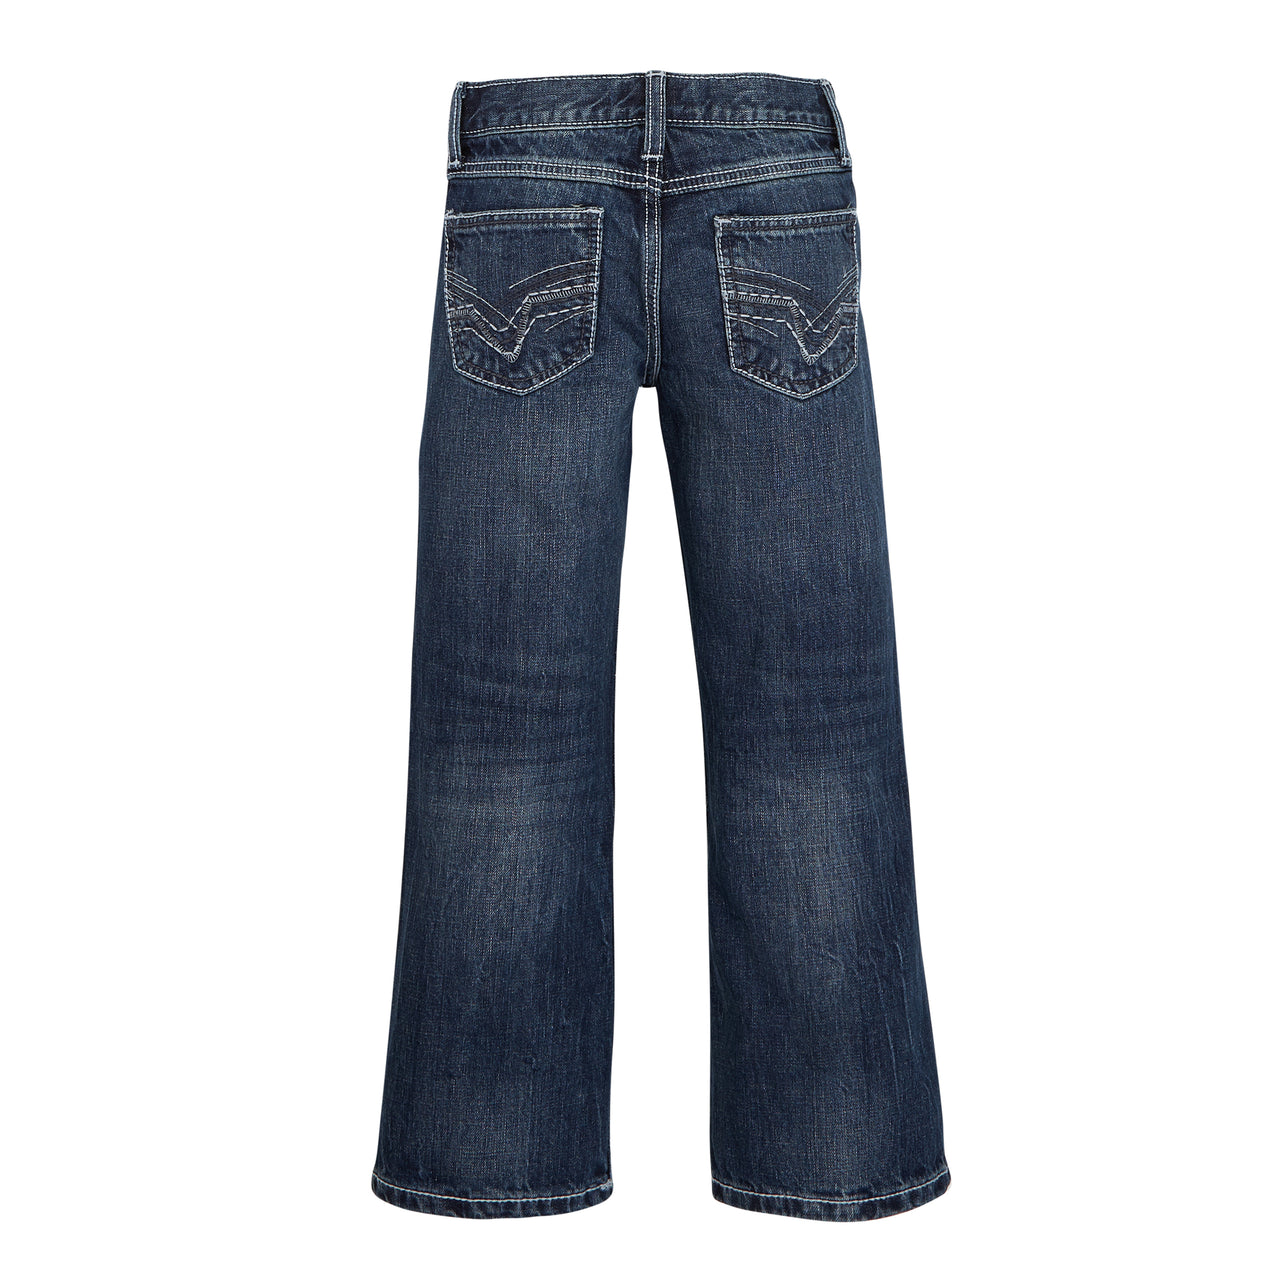 Wrangler Boys 20X Vintage Boot Cut Jeans